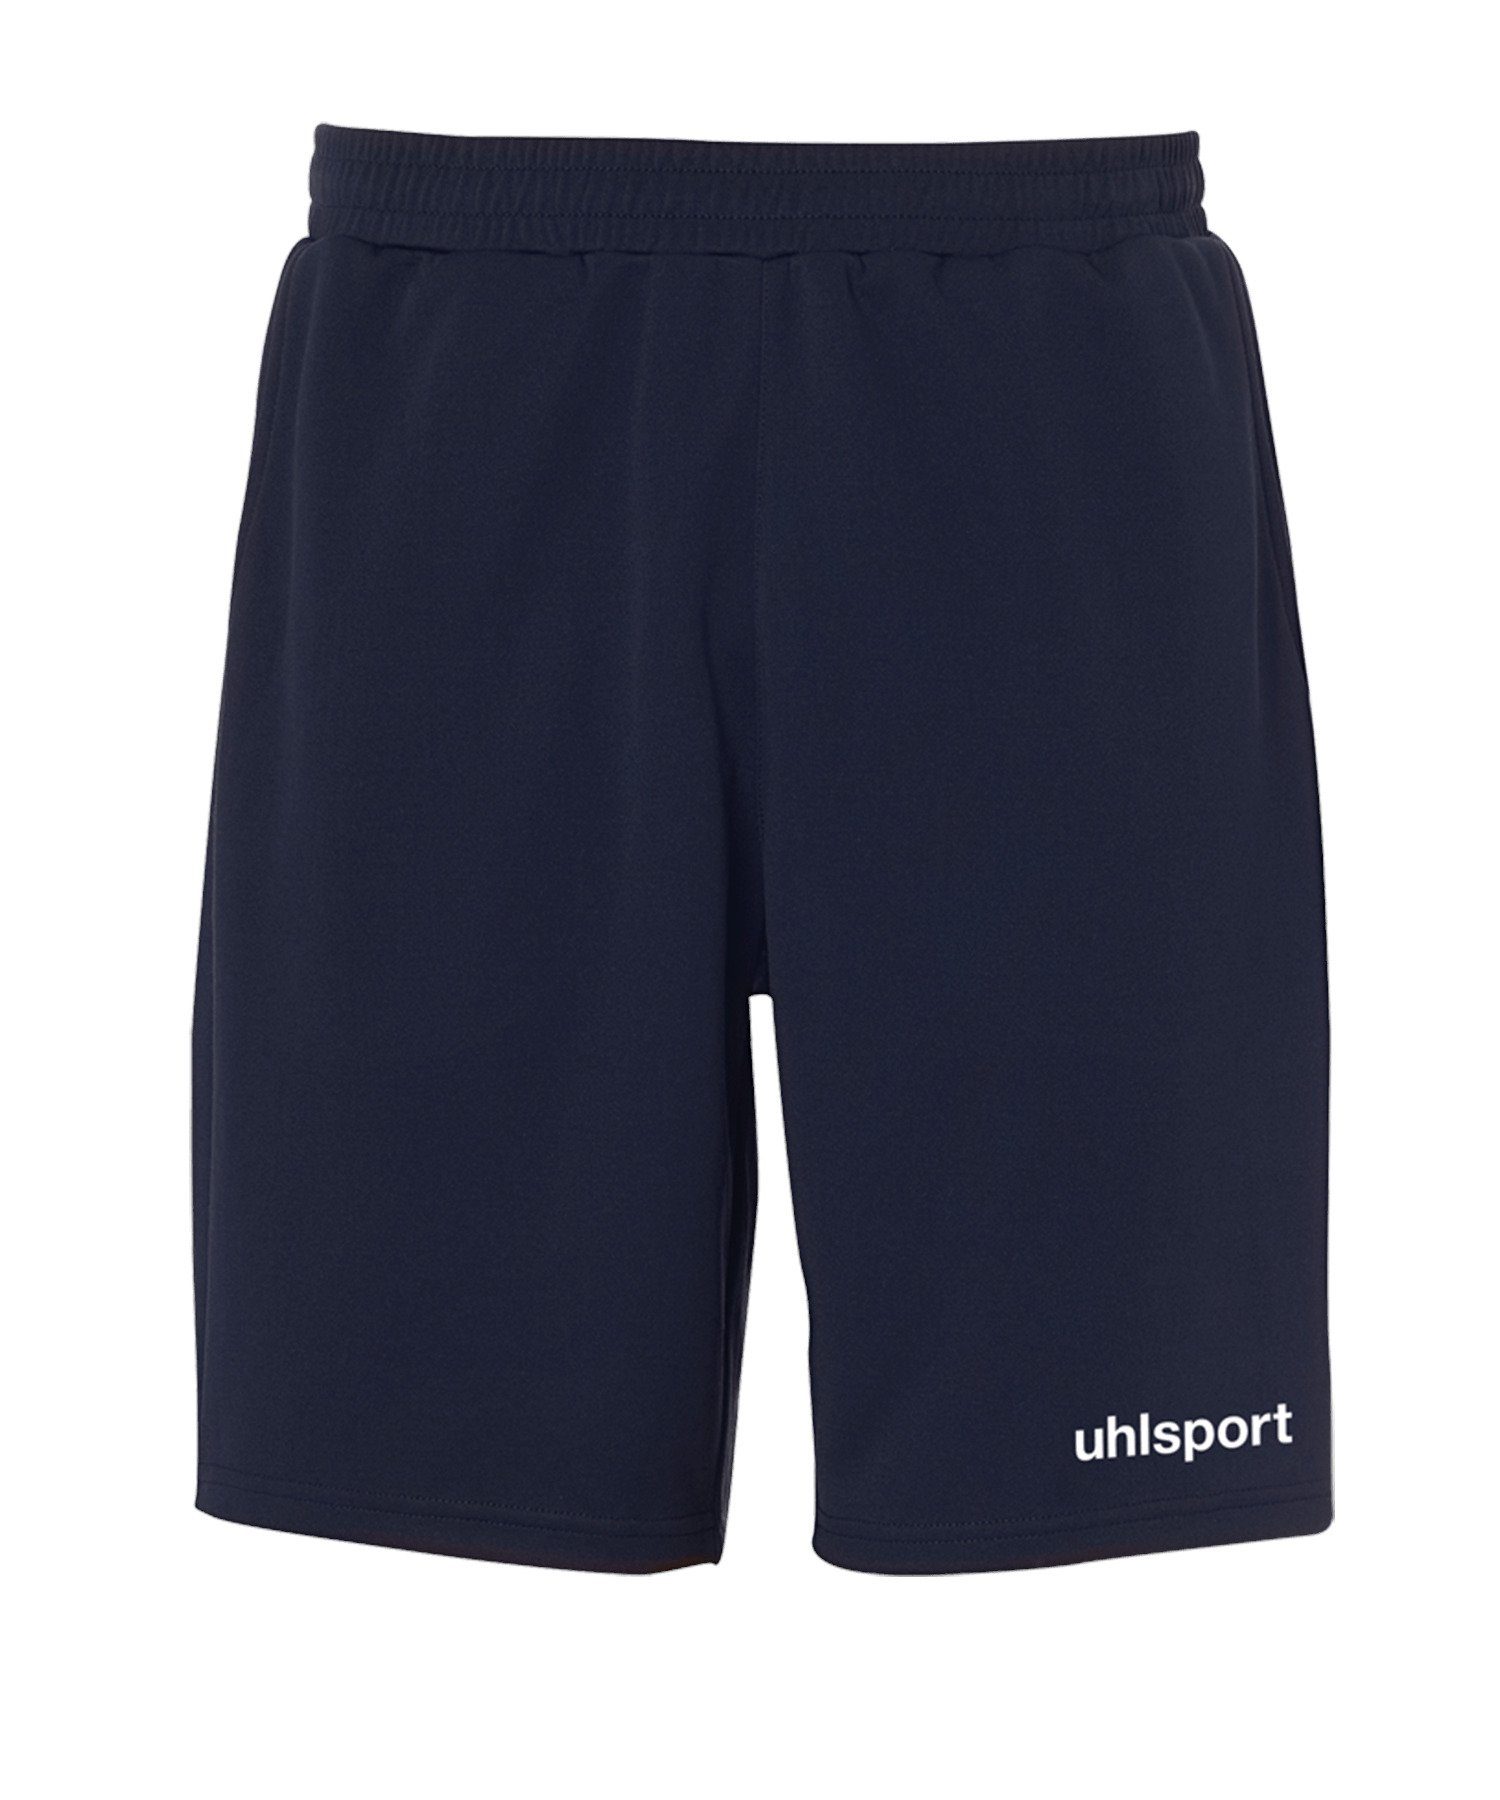 uhlsport Sporthose Essential PES-Short blau